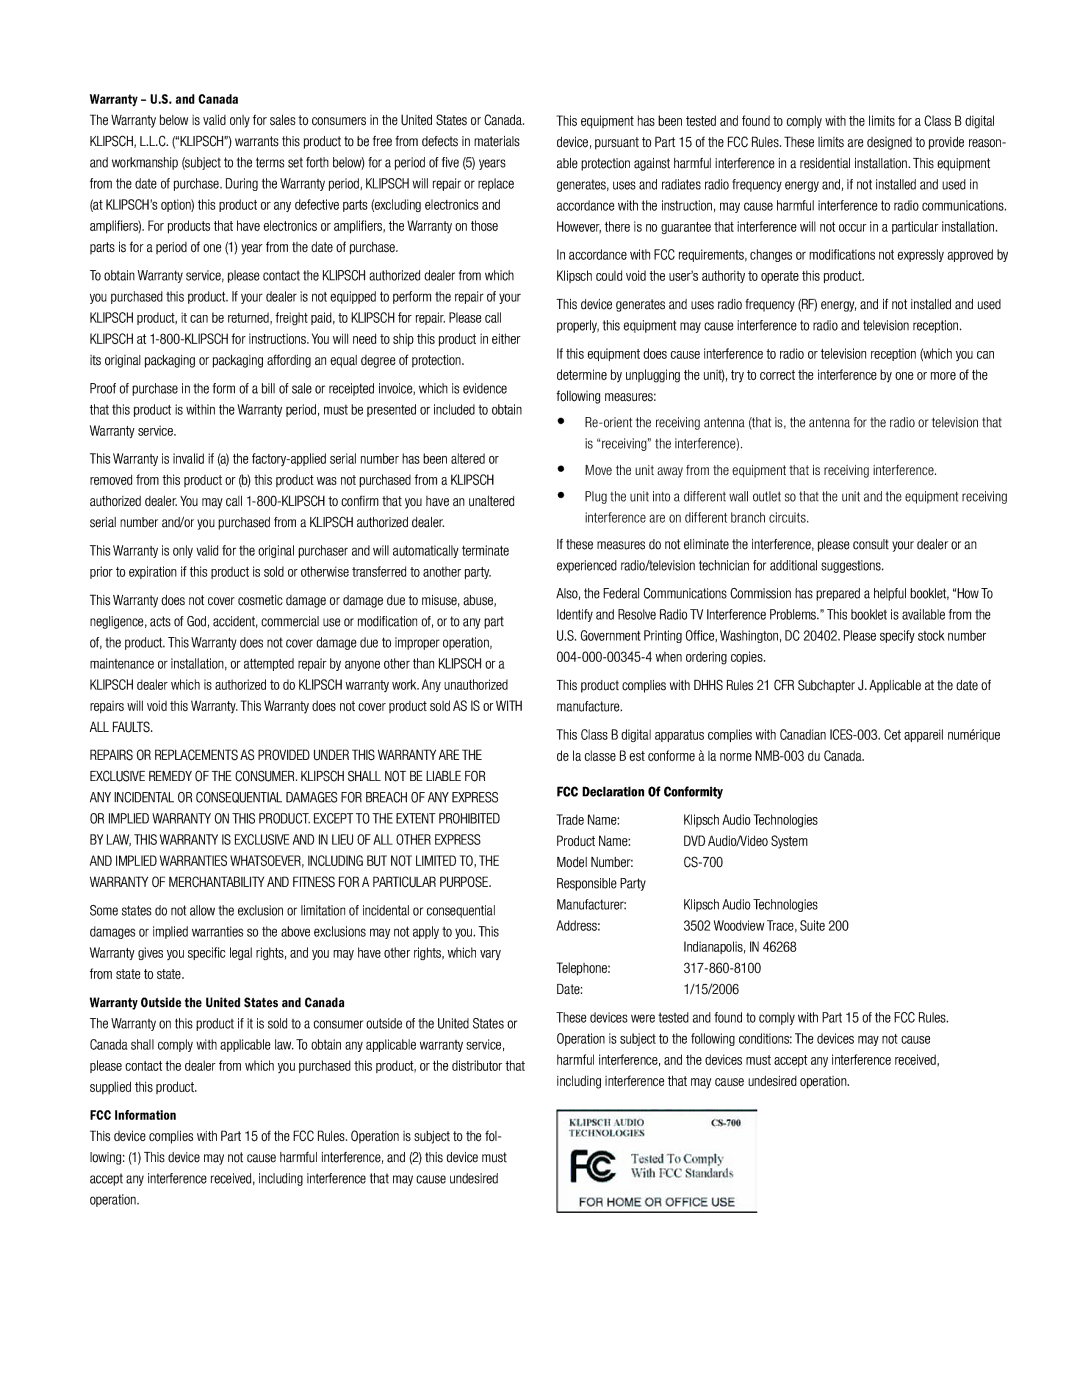 Klipsch CS-700 owner manual FCC Declaration Of Conformity Trade Name 